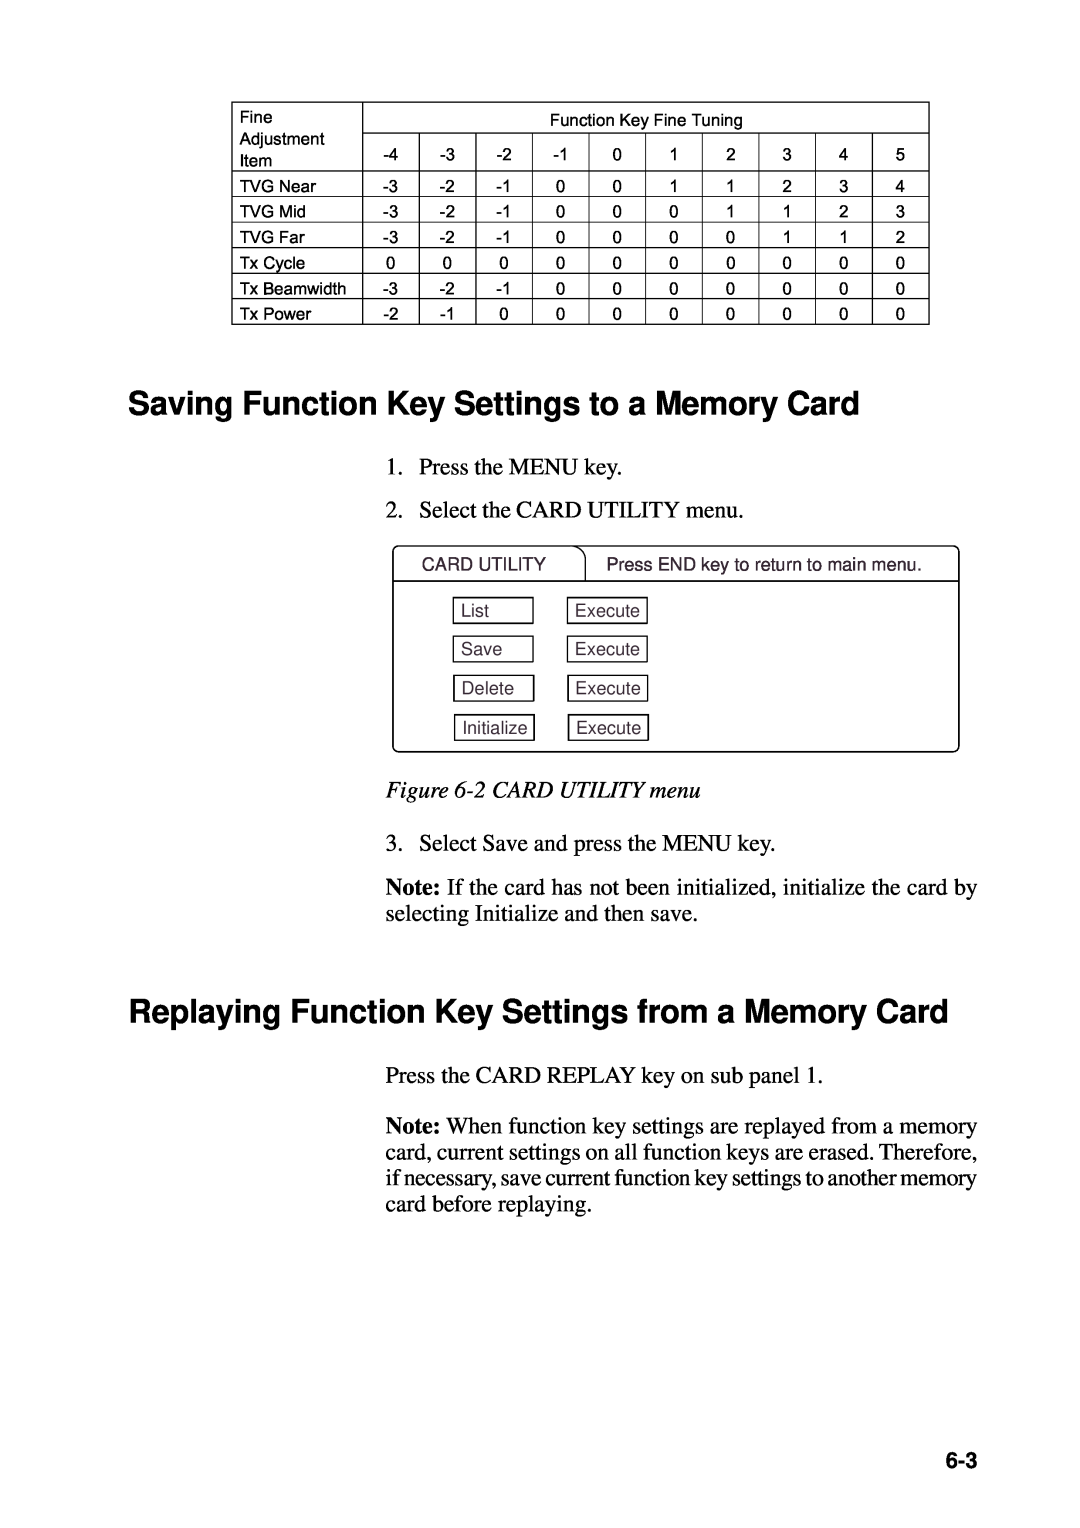 Furuno CSH-53 manual Saving Function Key Settings to a Memory Card, Replaying Function Key Settings from a Memory Card 